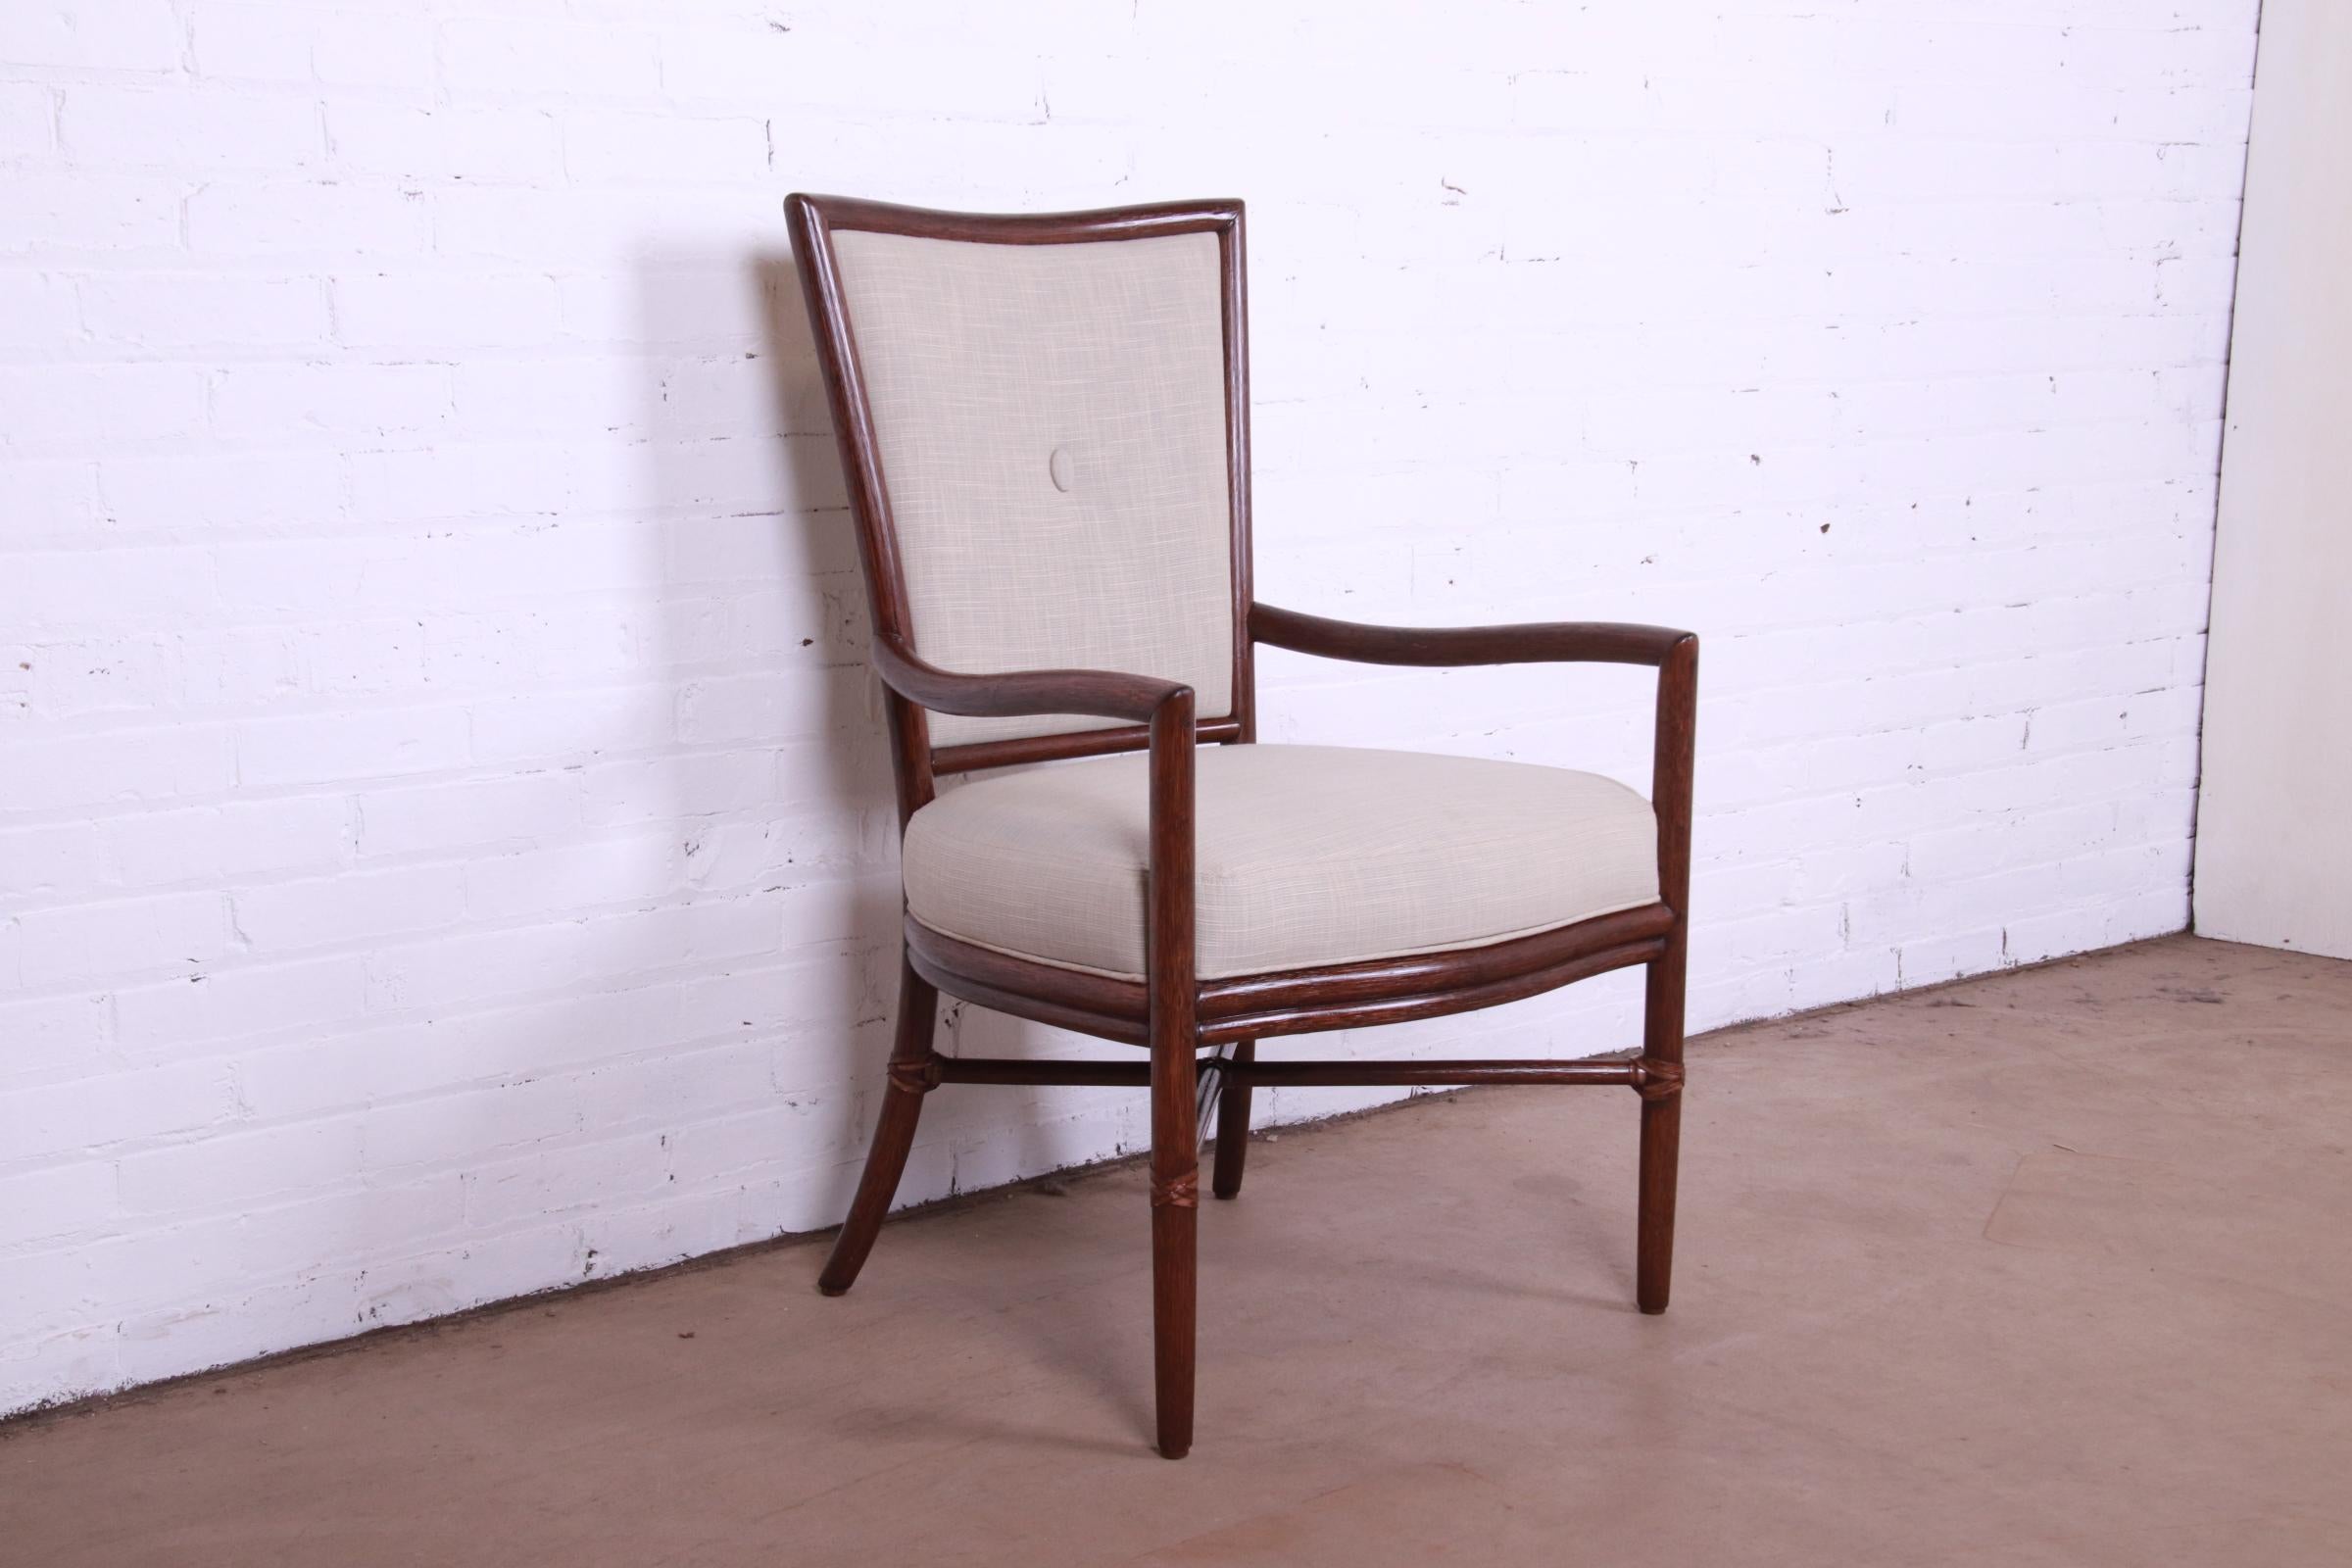 20th Century Barbara Barry for McGuire Hollywood Regency Organic Modern Rattan Club Chair For Sale